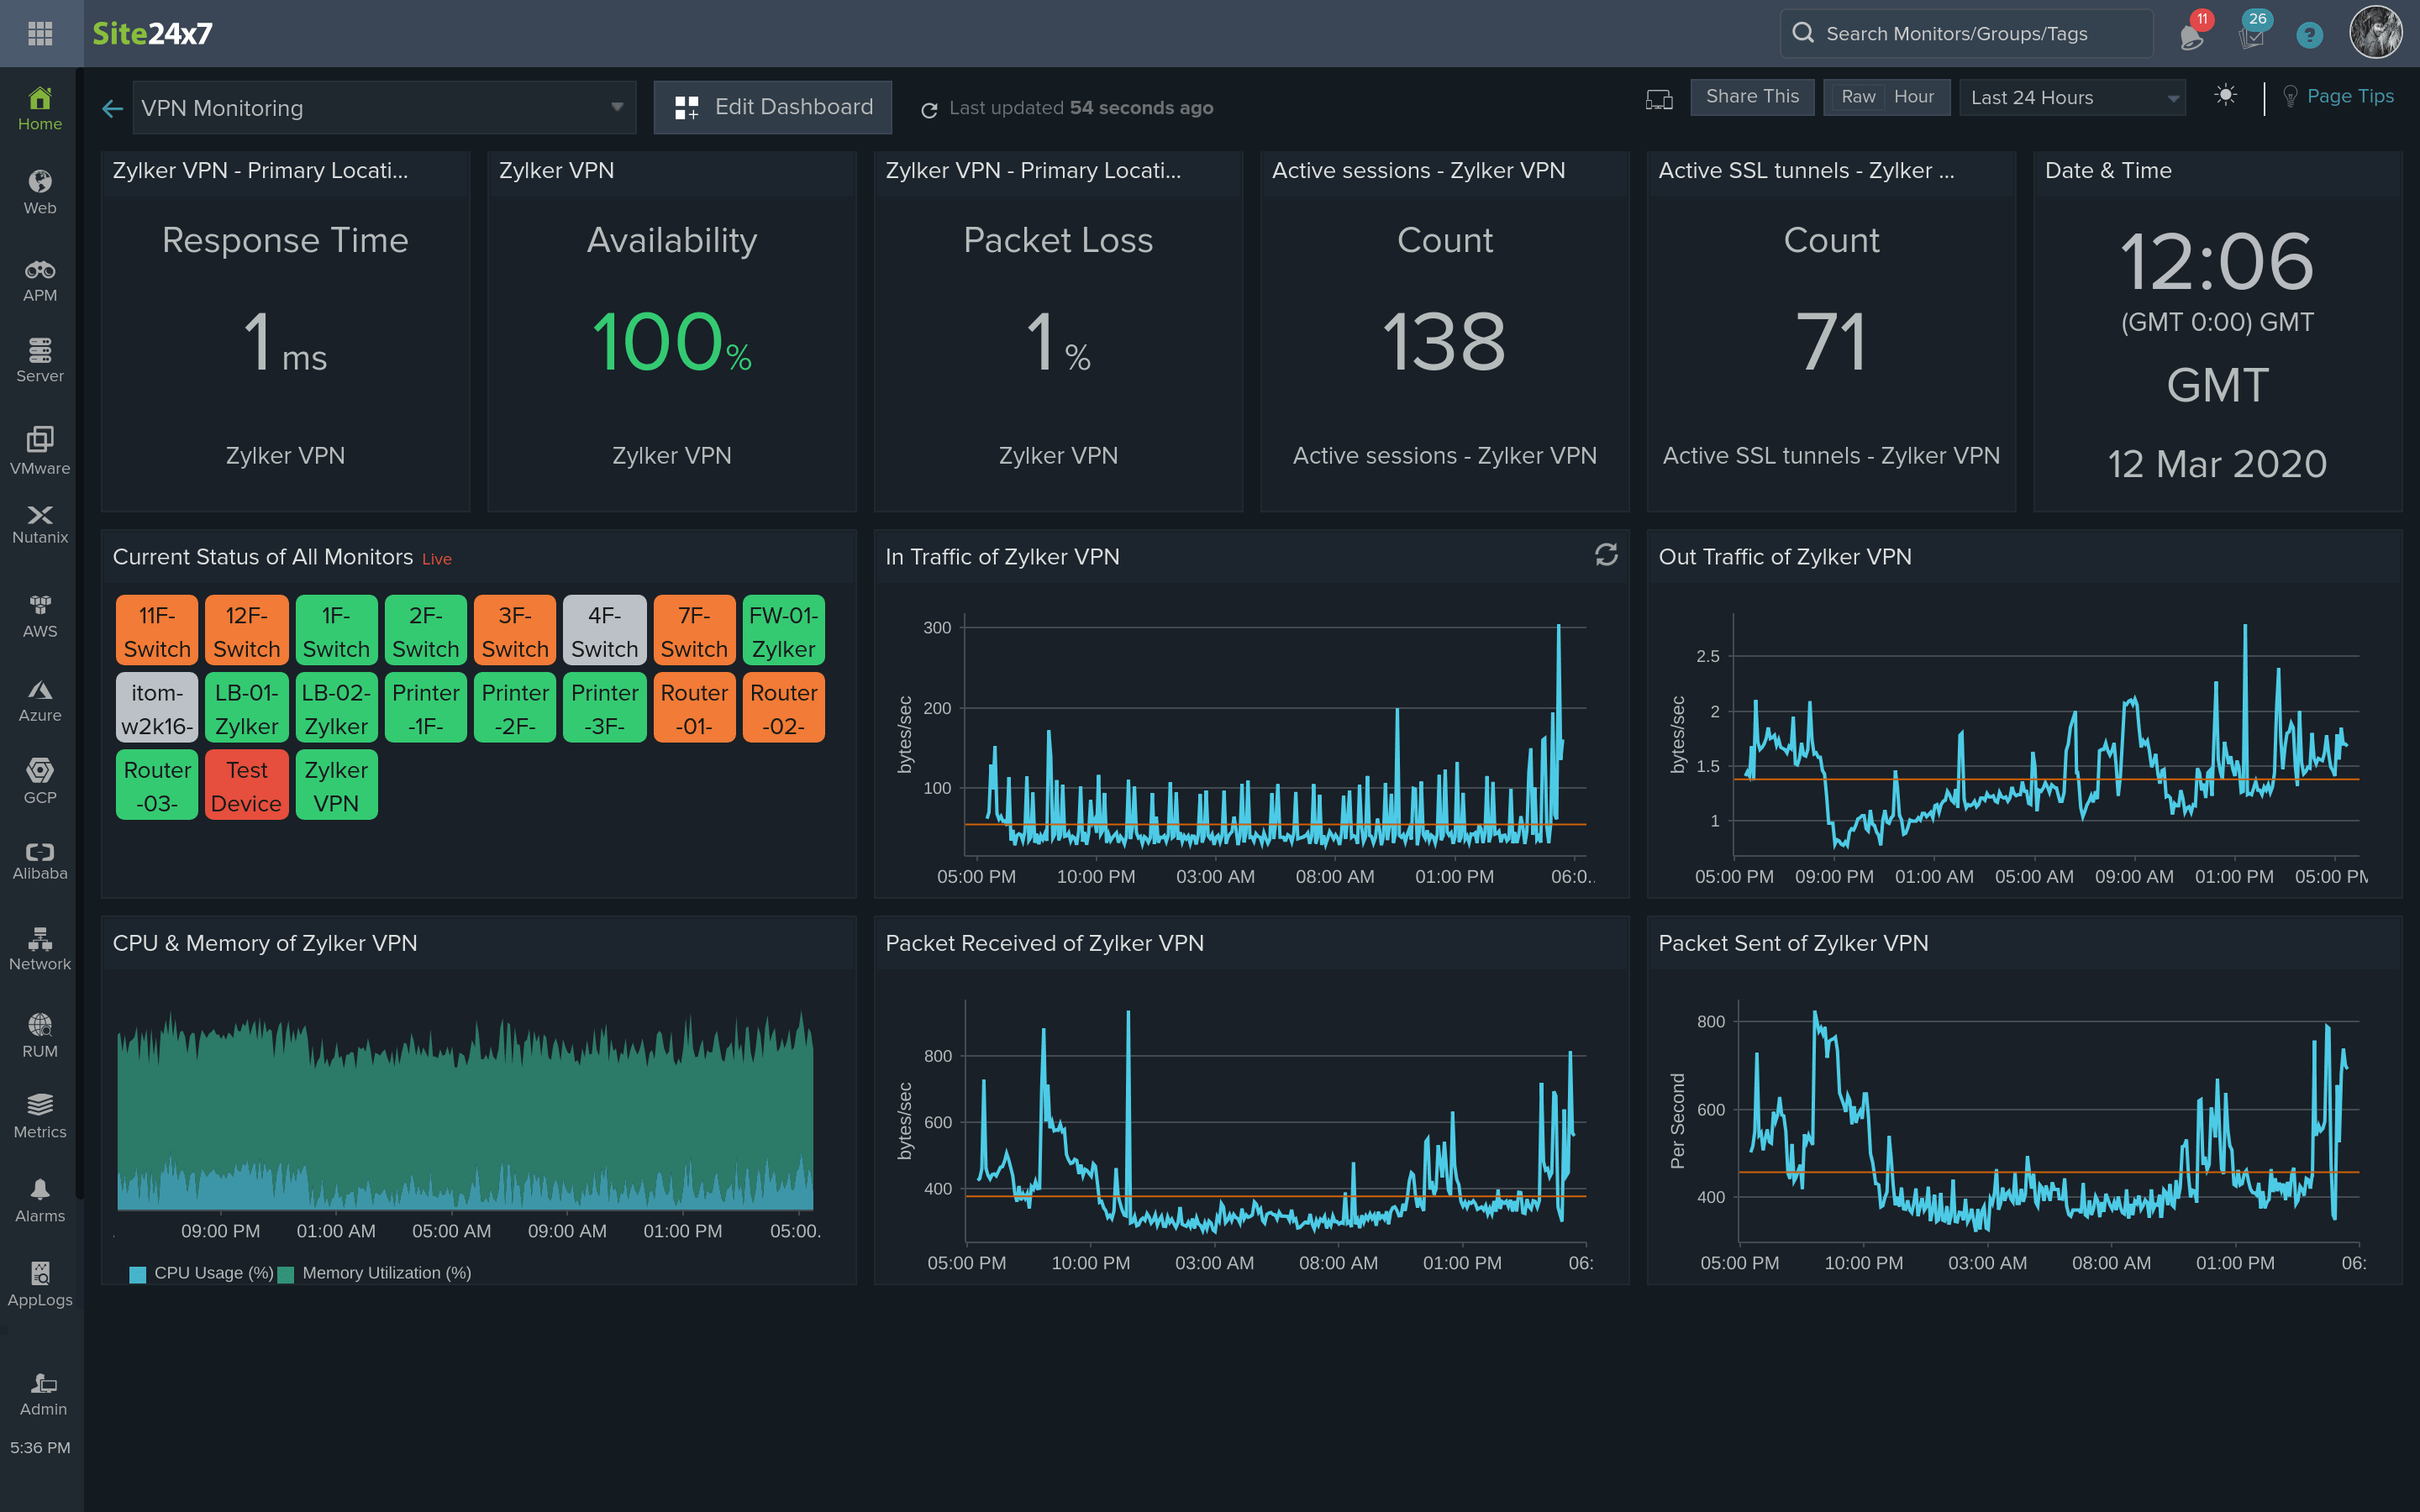 VPN monitoring tool dashboard